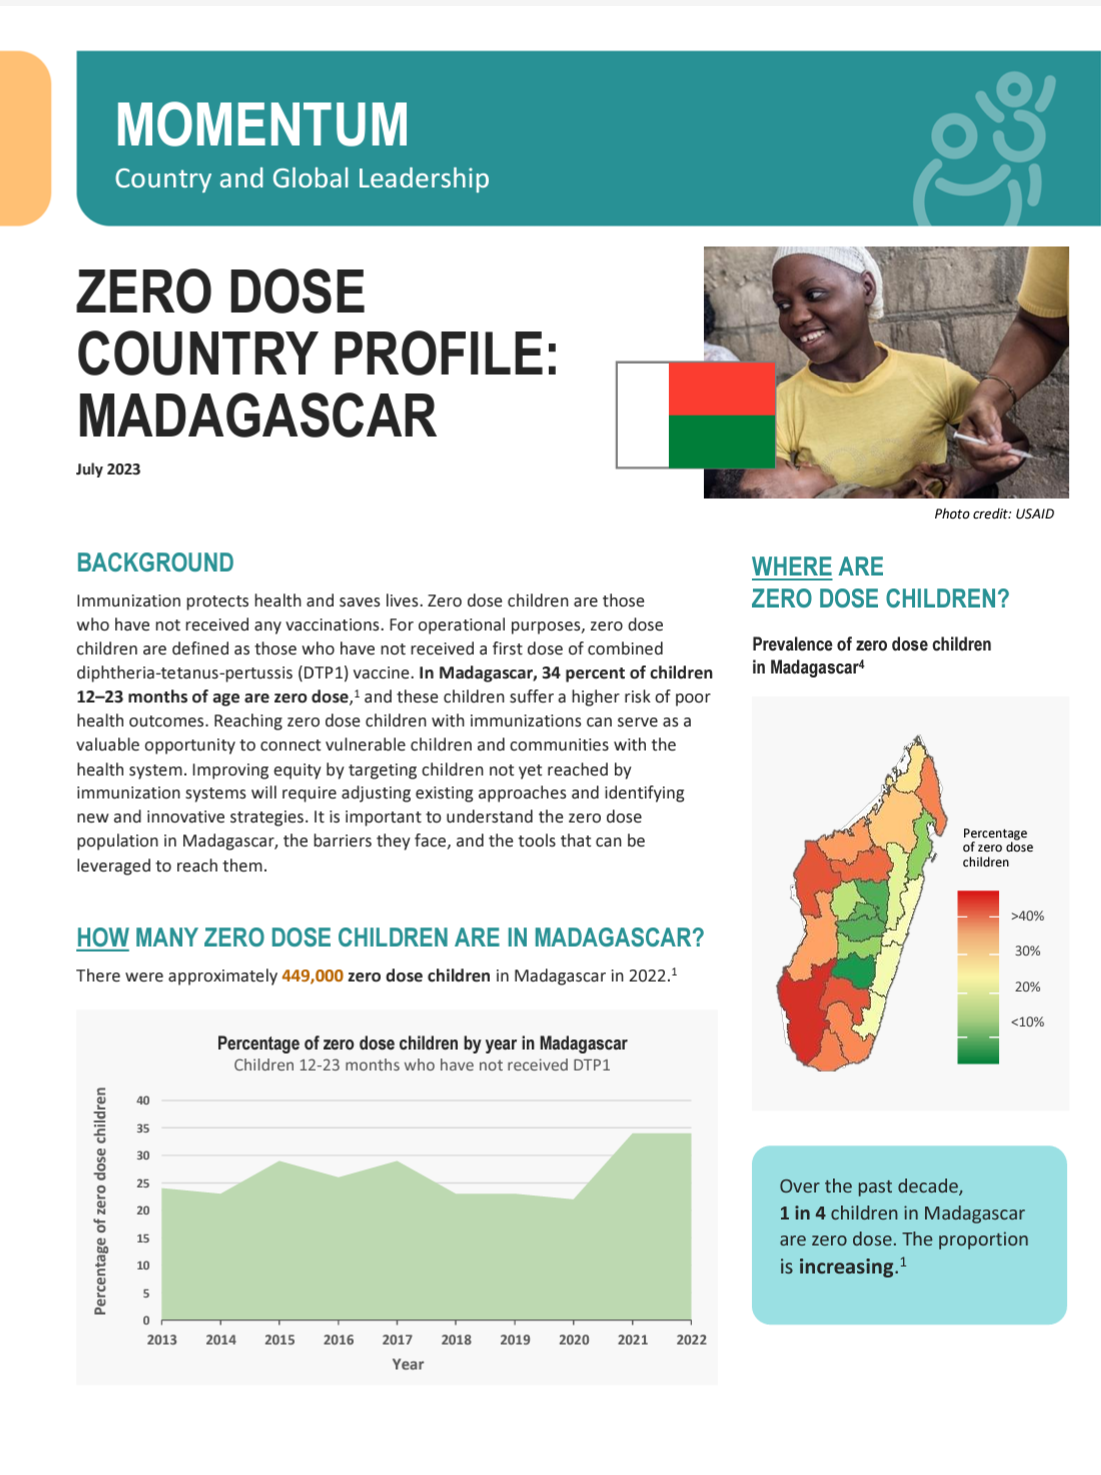 Madagascar: Country Profile